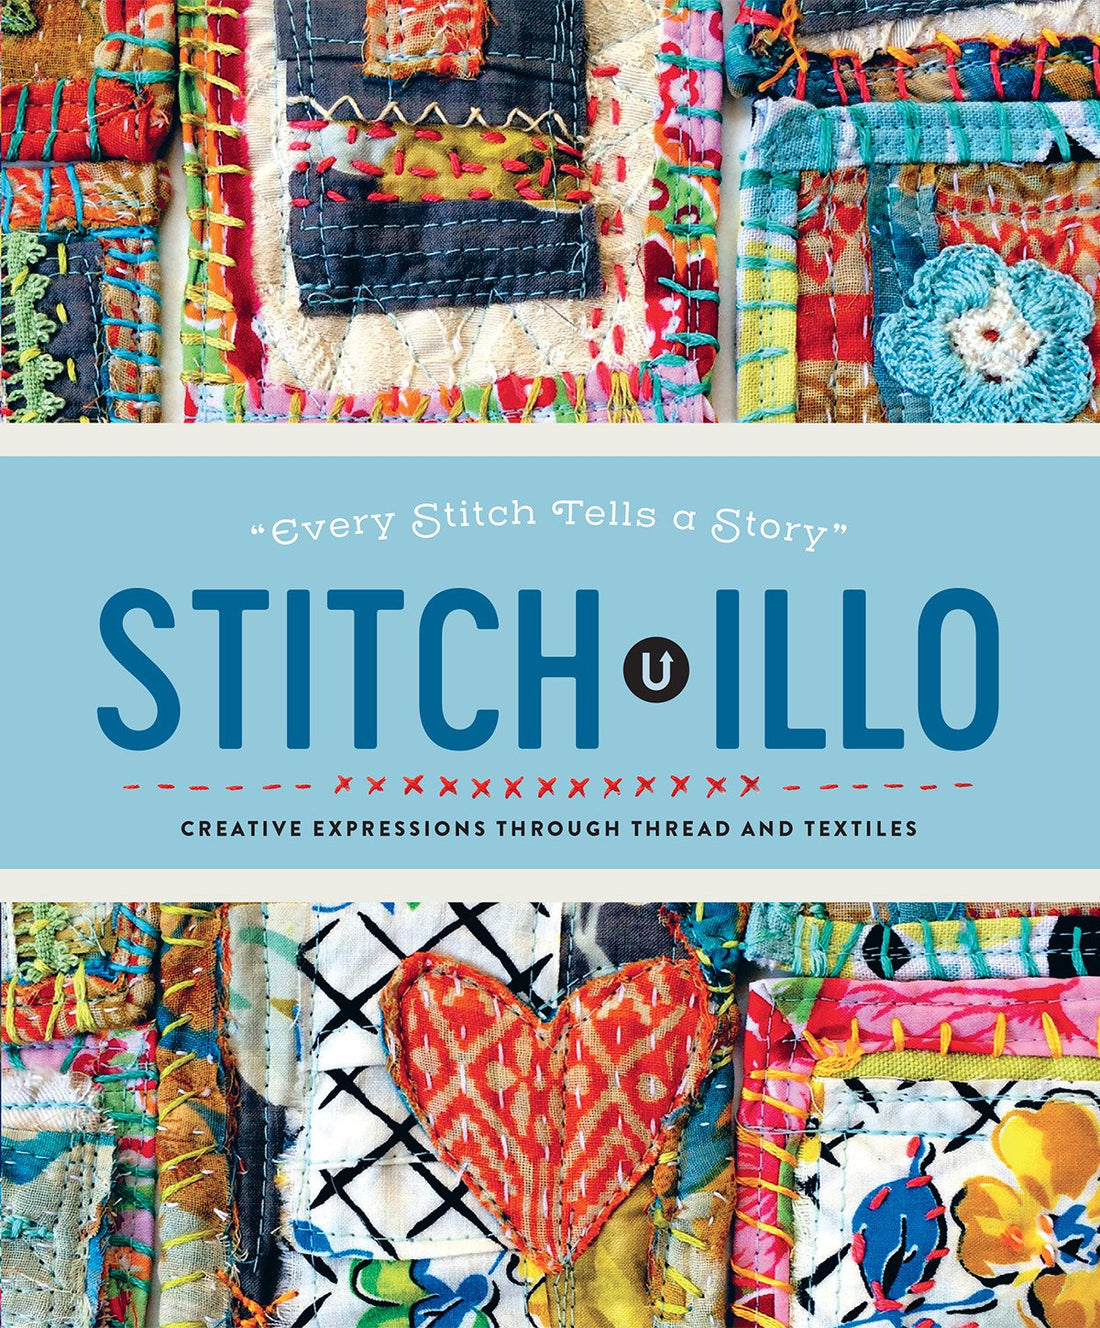 Stitch-illo by Uppercase